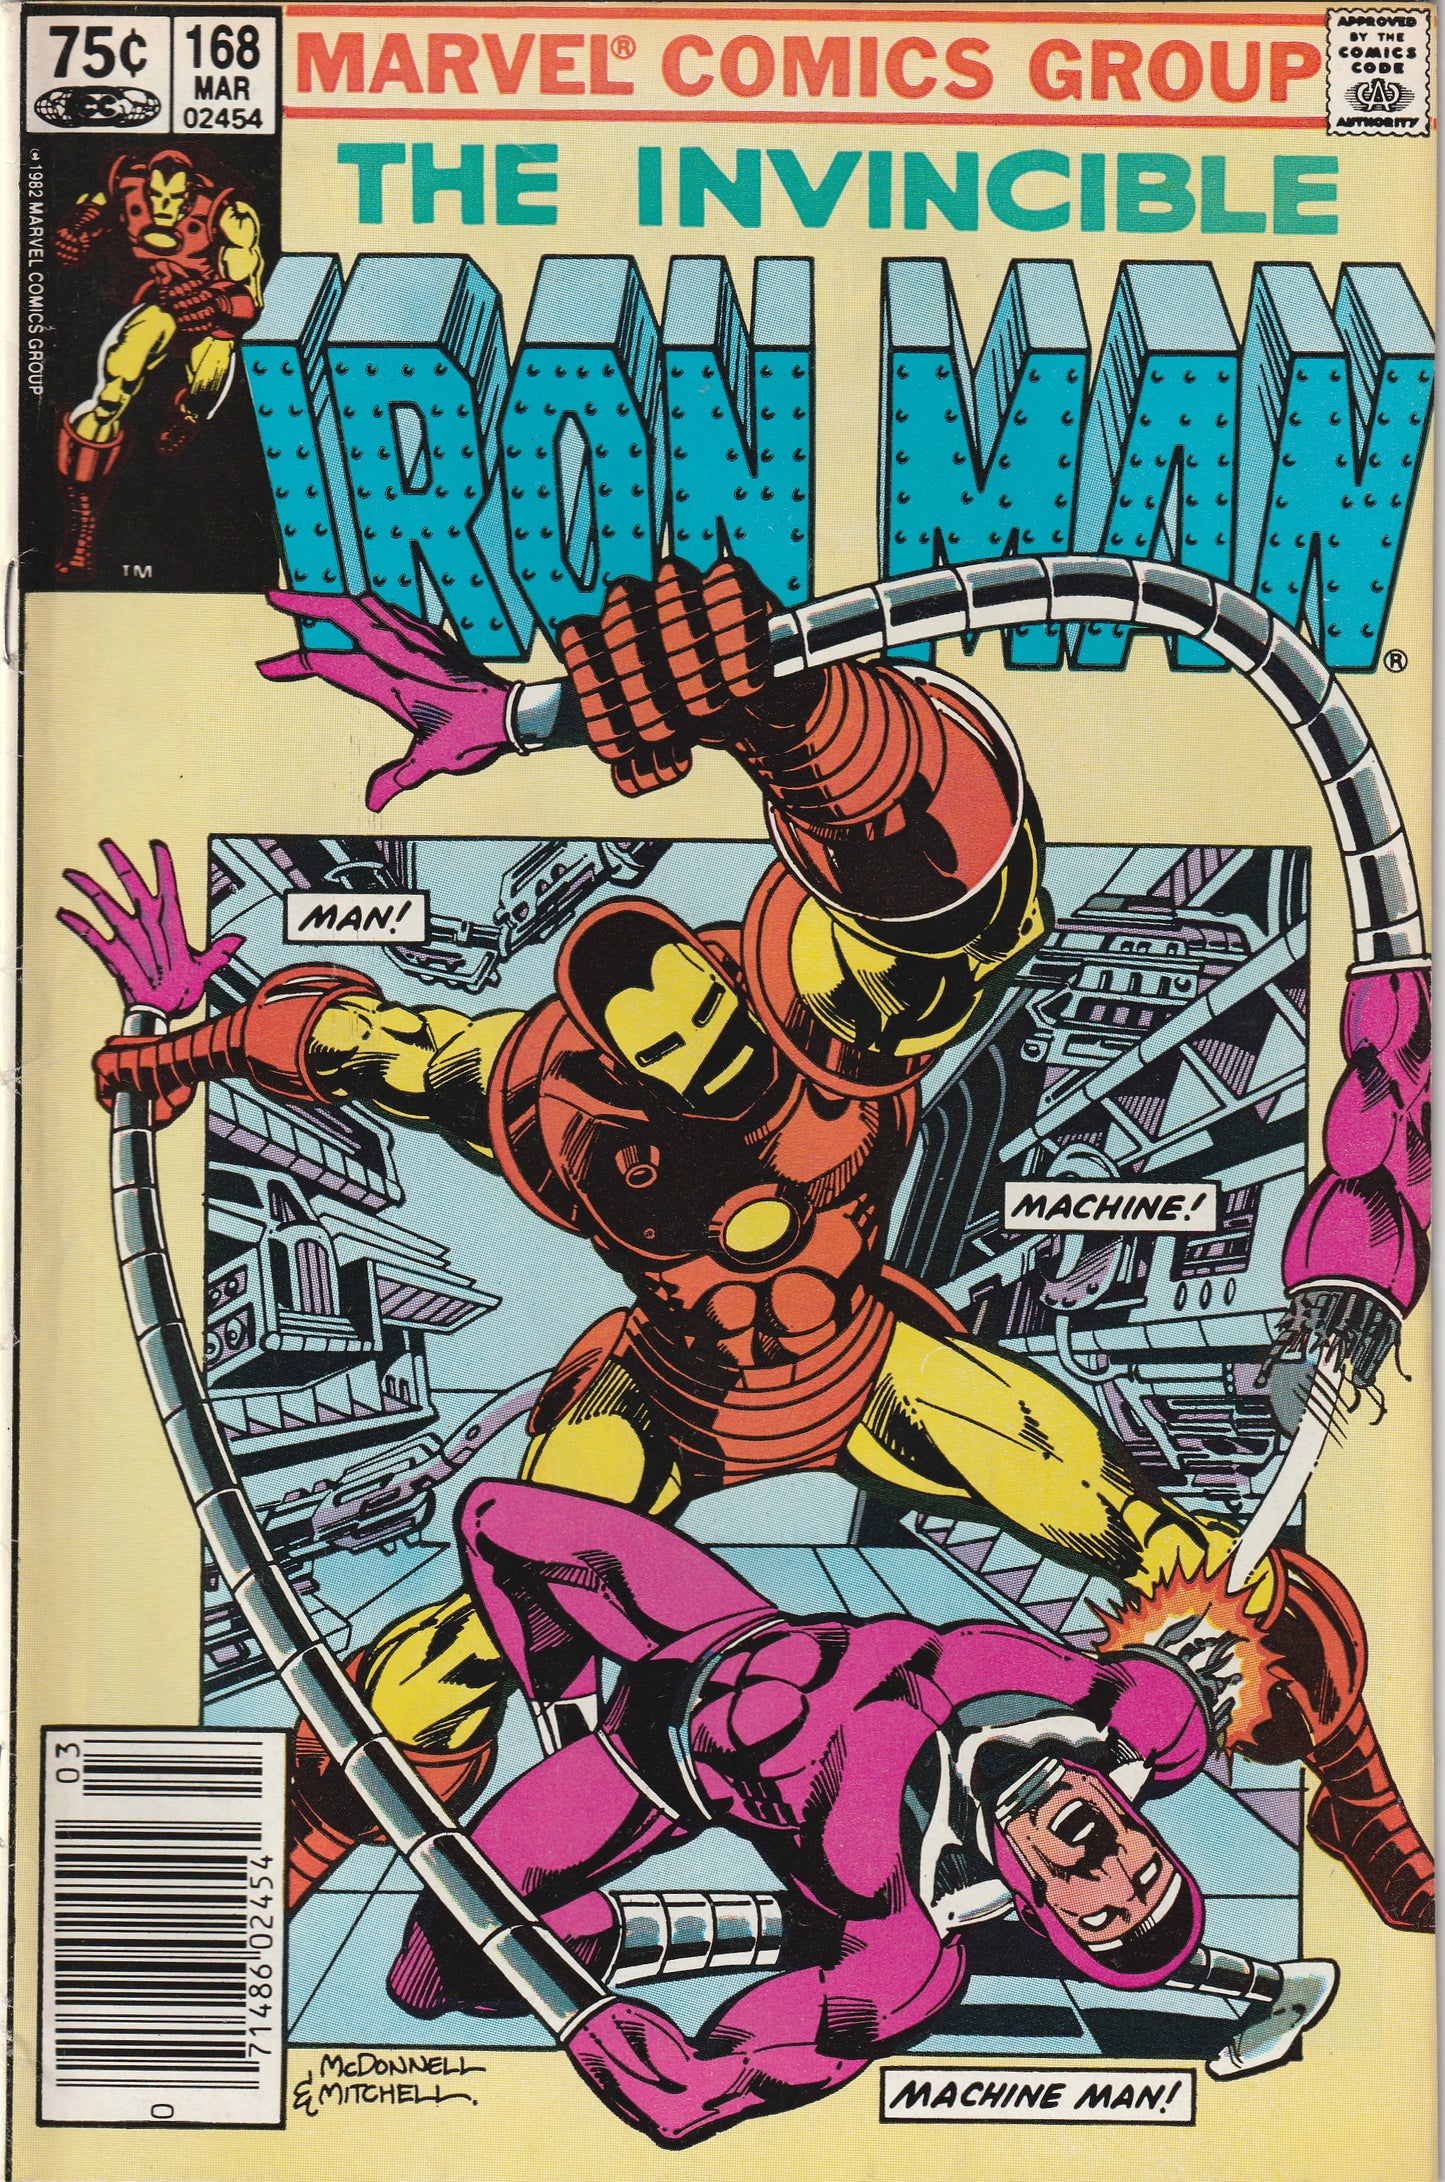 Iron Man #168 (1983) - Machine Man appearance